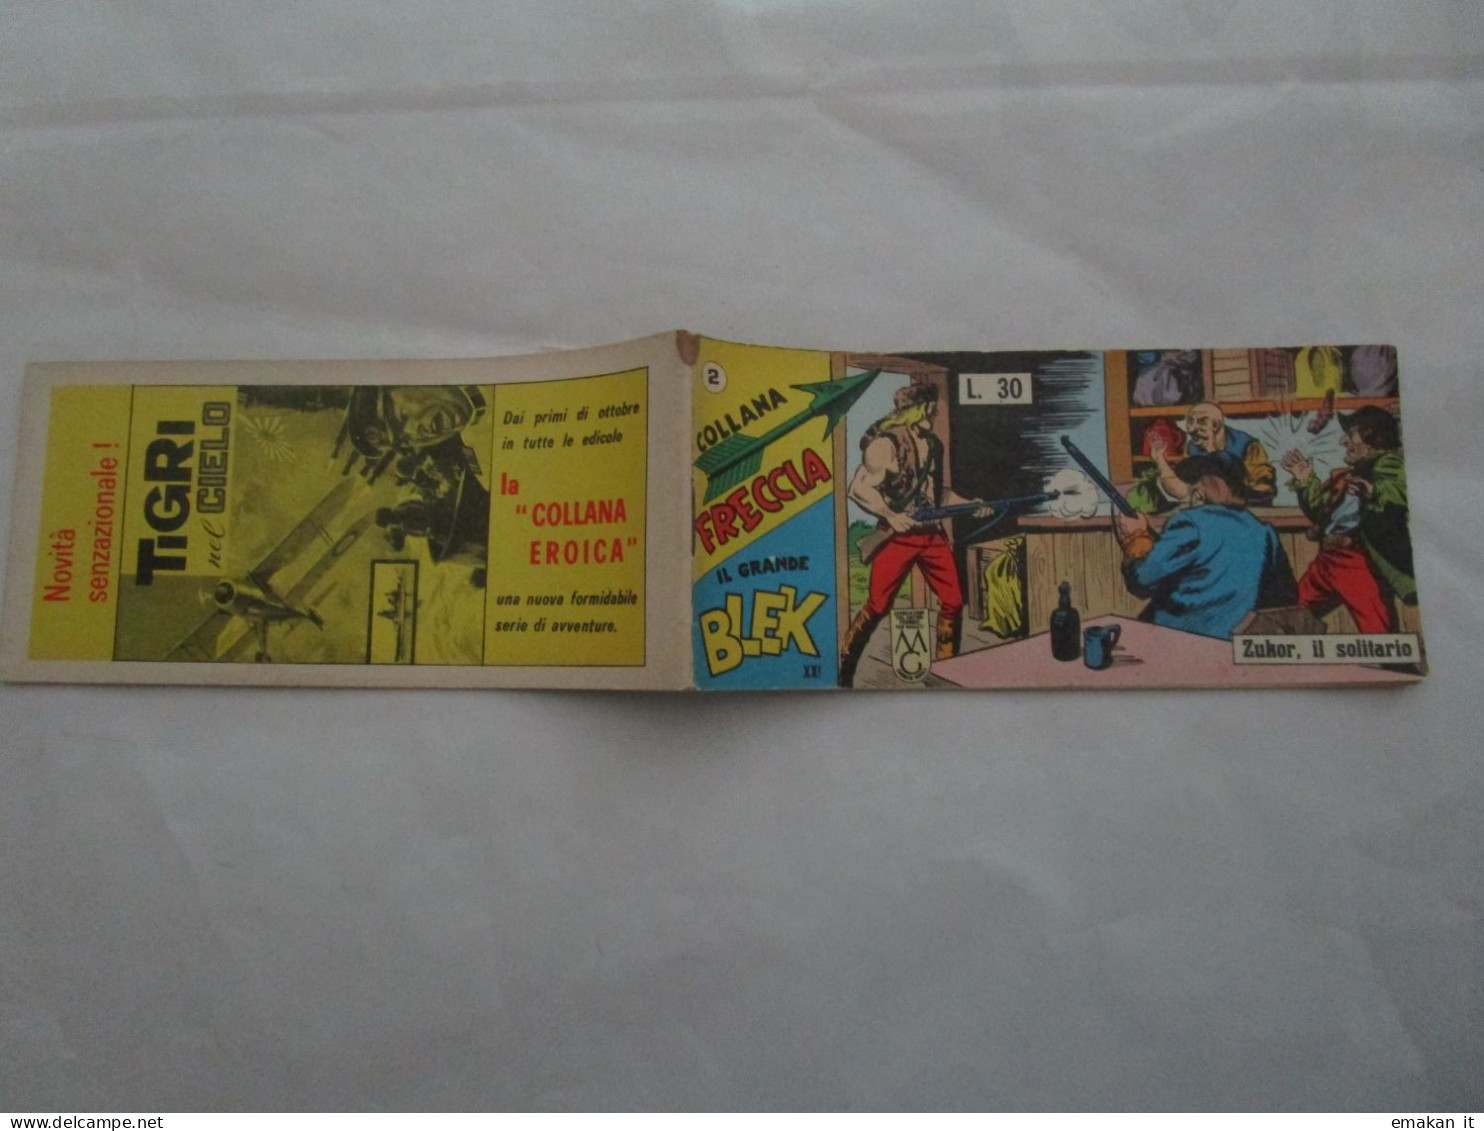 # STRISCIA IL GRANDE BLEK SERIE XXI N 2 / 1962 - First Editions